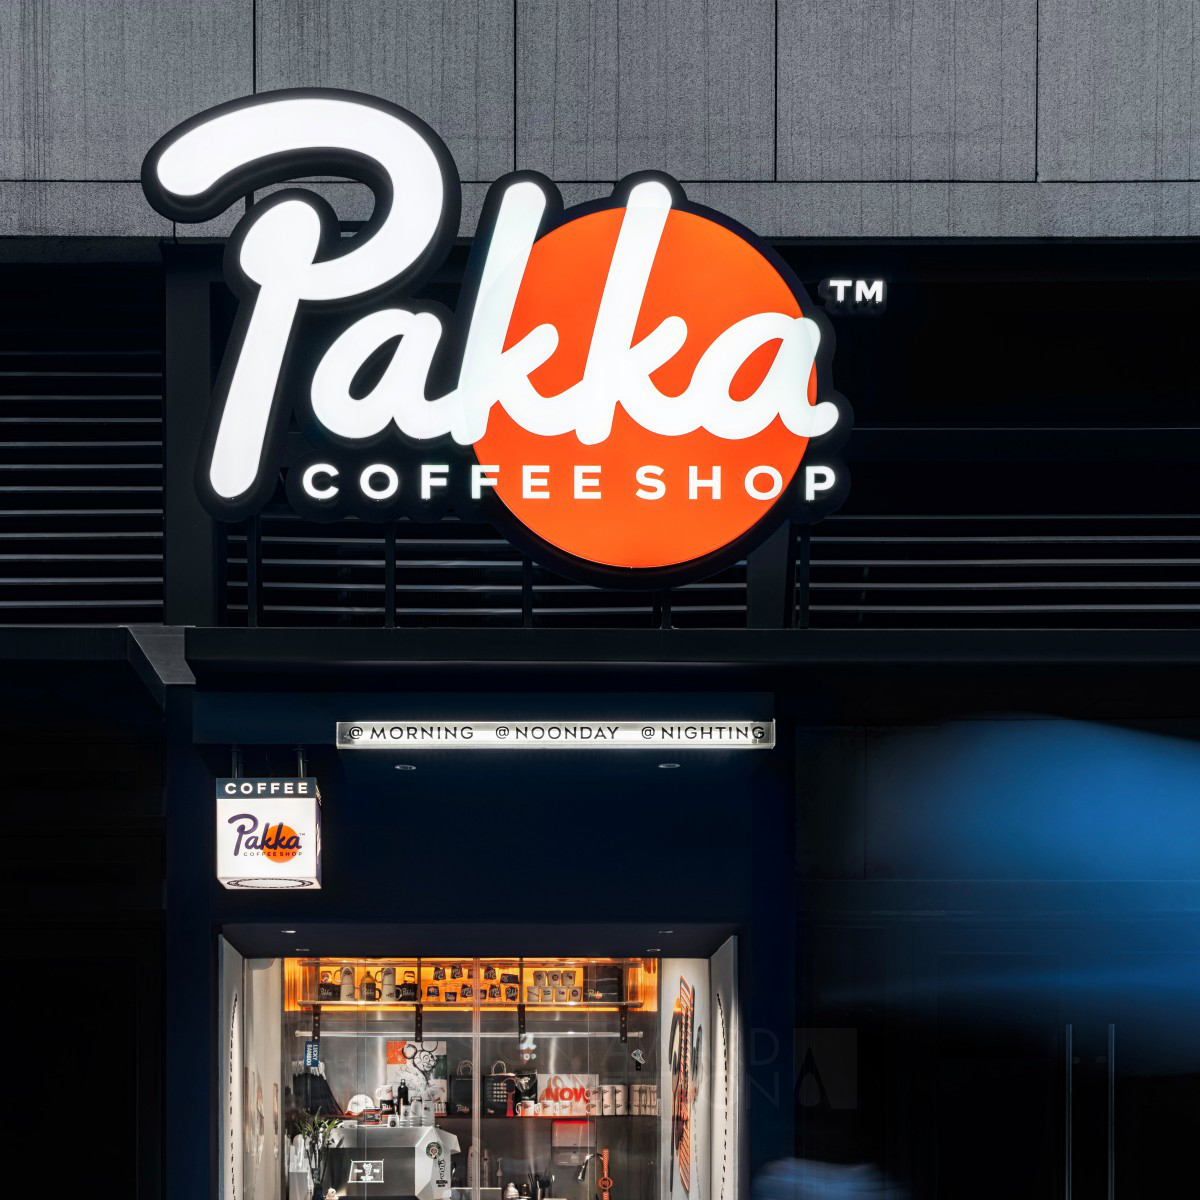 Pakka Coffee Shop Brand Image